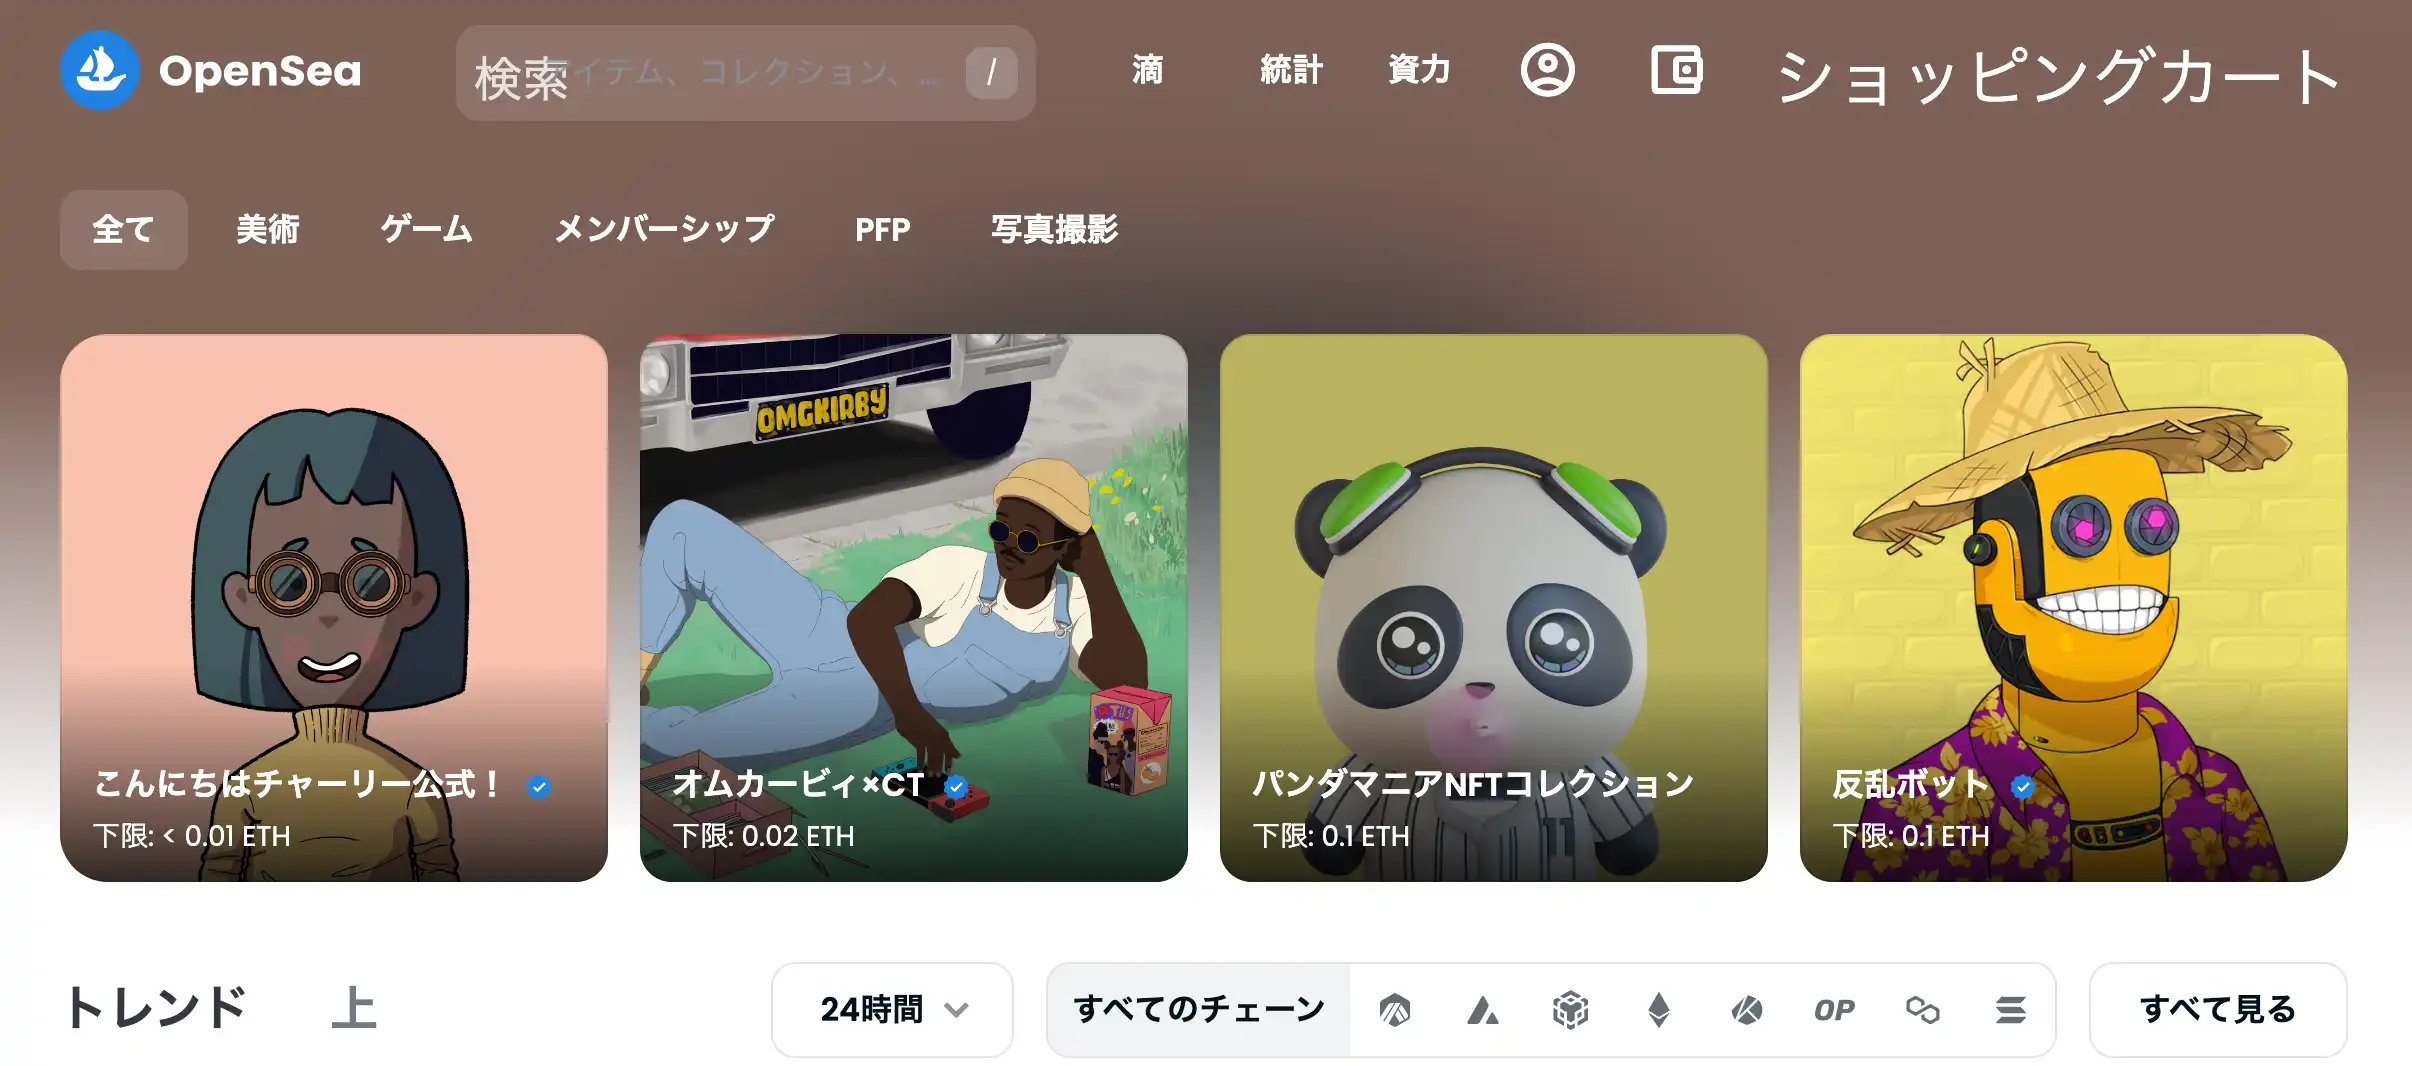 GoogleChromeの翻訳機能を使いOpenSeaを日本語化する方法03